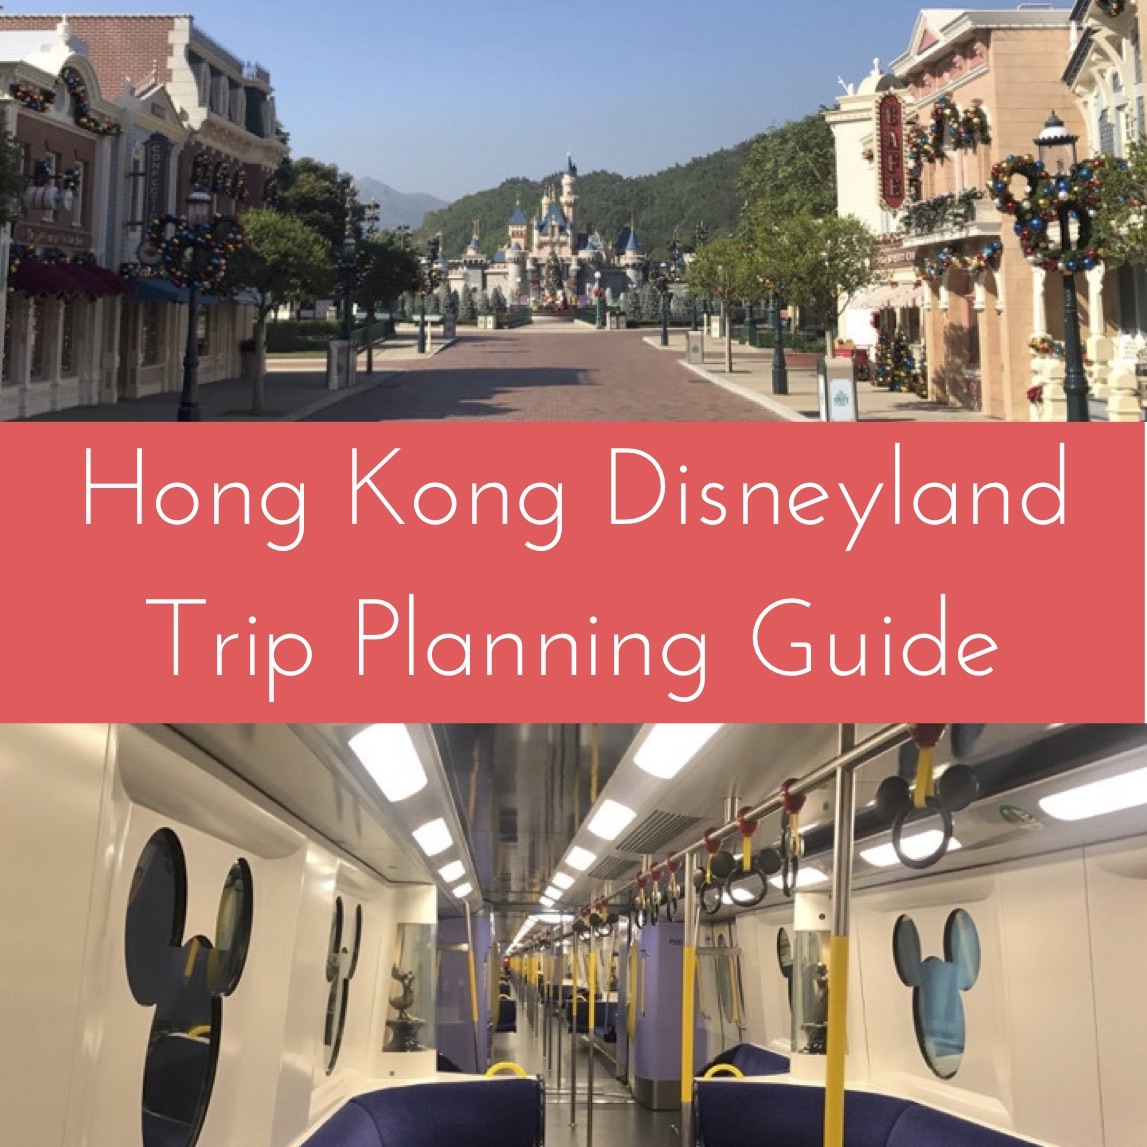 Guía de planificación de viajes a Hong Kong Disneyland